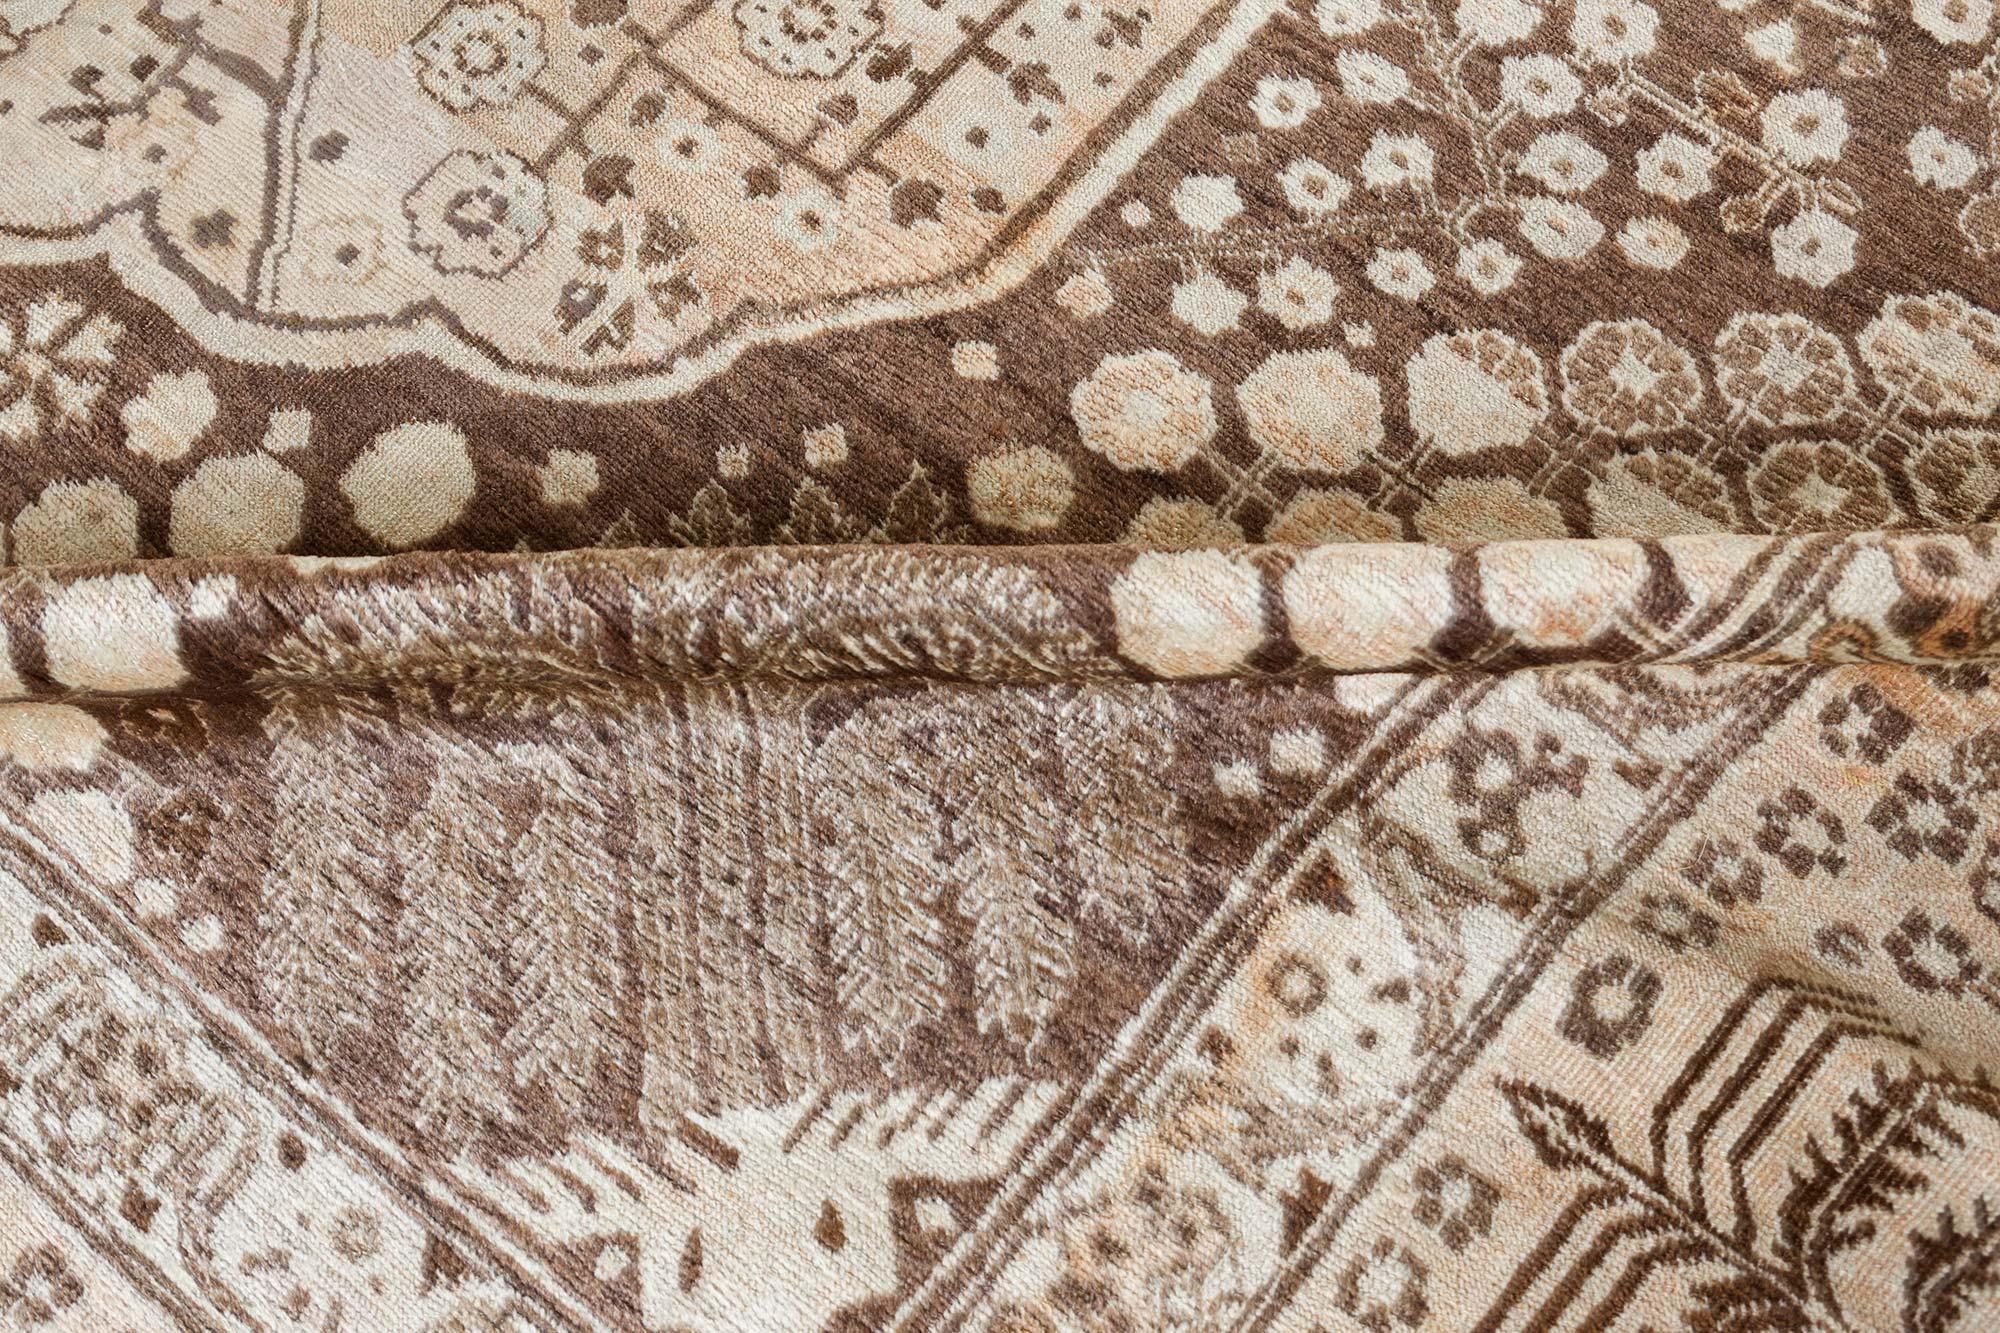 Authentic 19th century beige Persian Tabriz rug
Size: 12'0